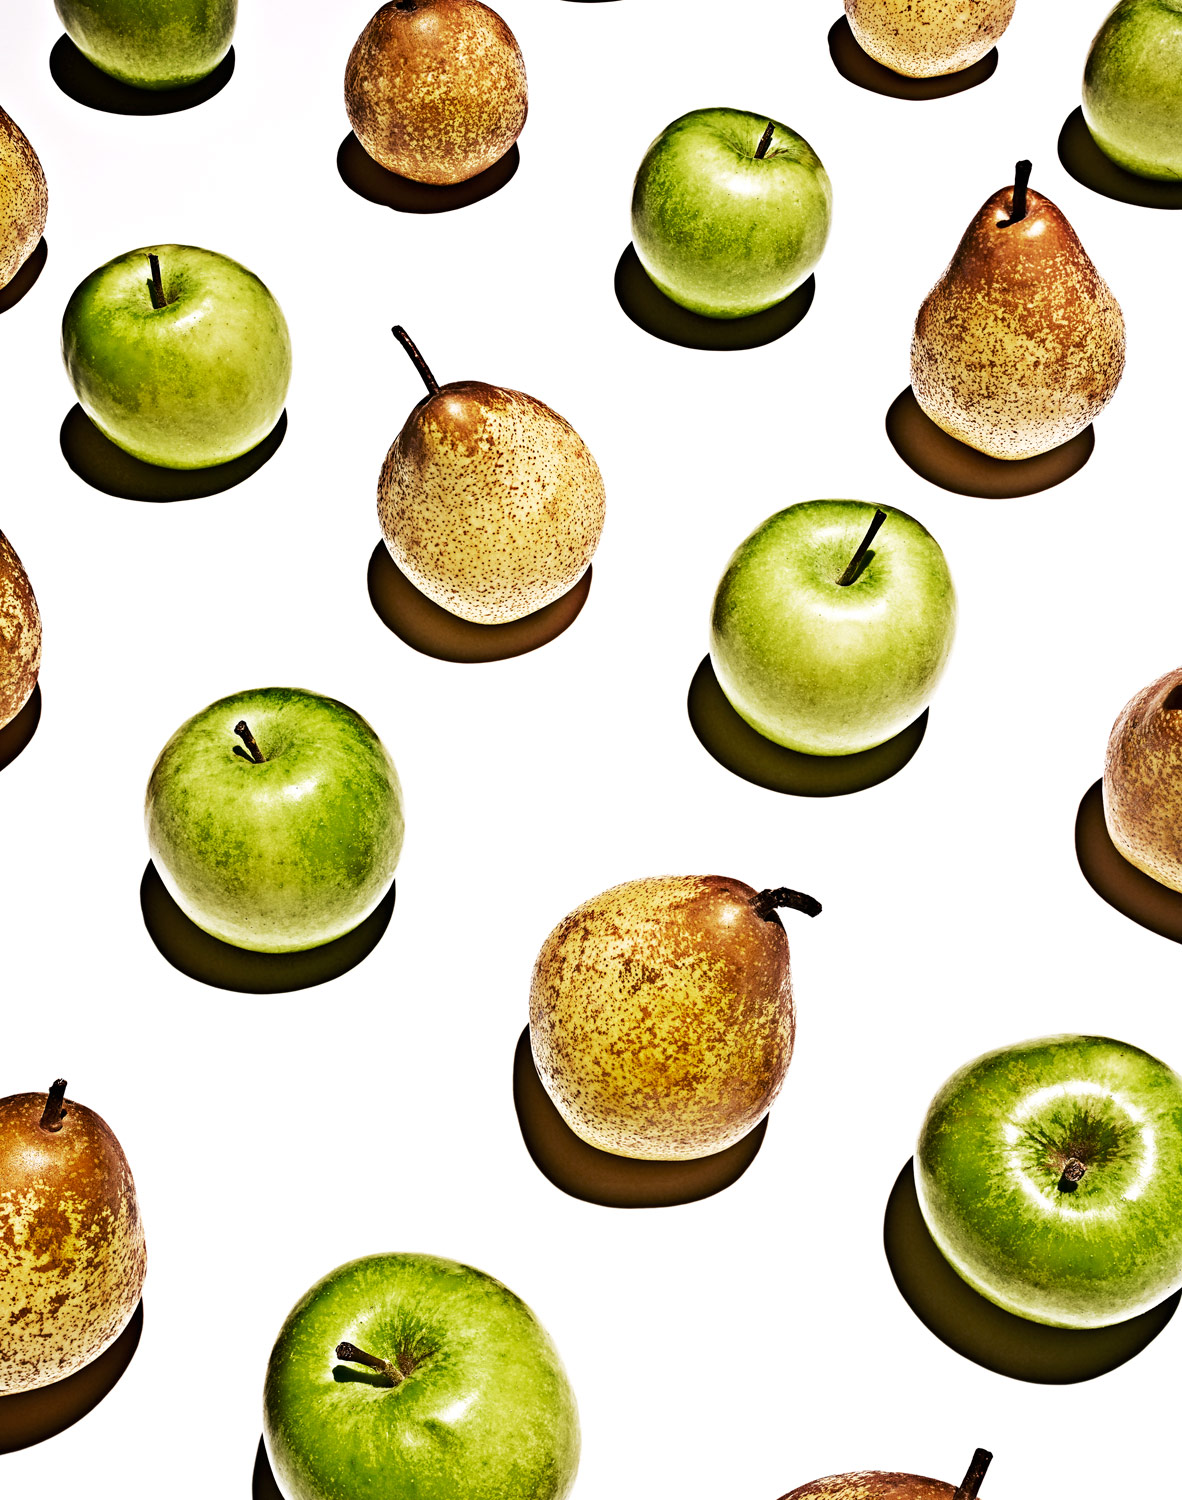 Apple-and-Pears.jpg